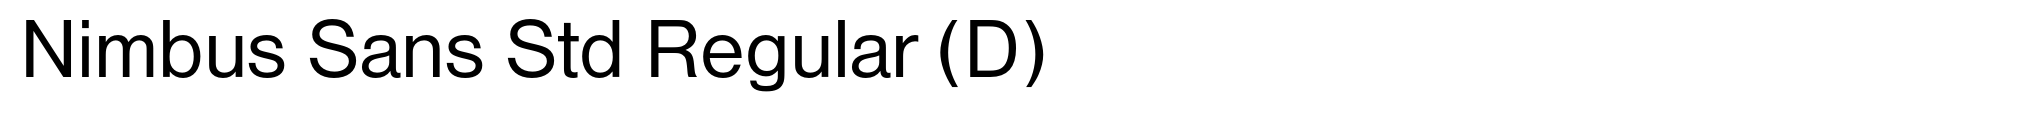 Nimbus Sans Std Regular (D) image